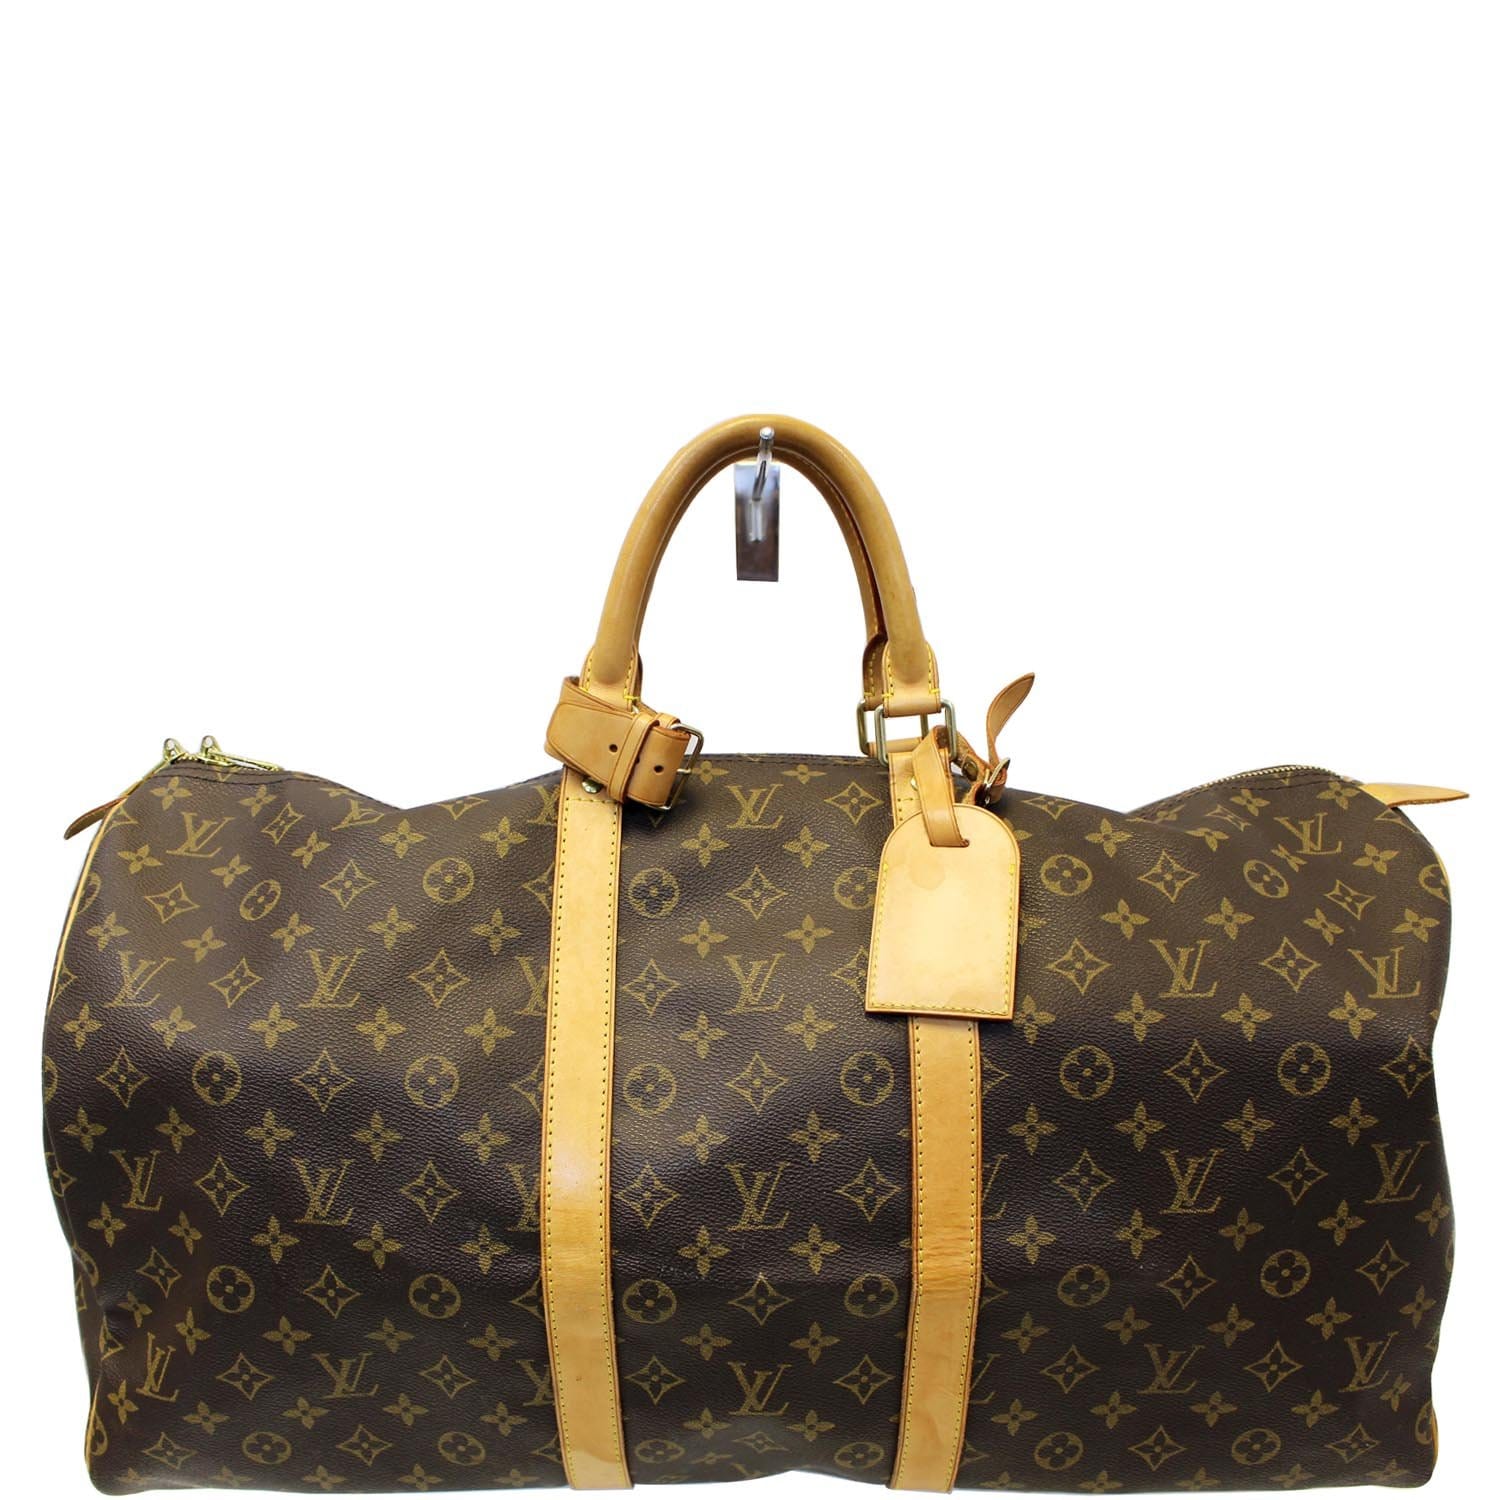 Louis Vuitton Keepall 55 Monogram Canvas Travel Bag on SALE